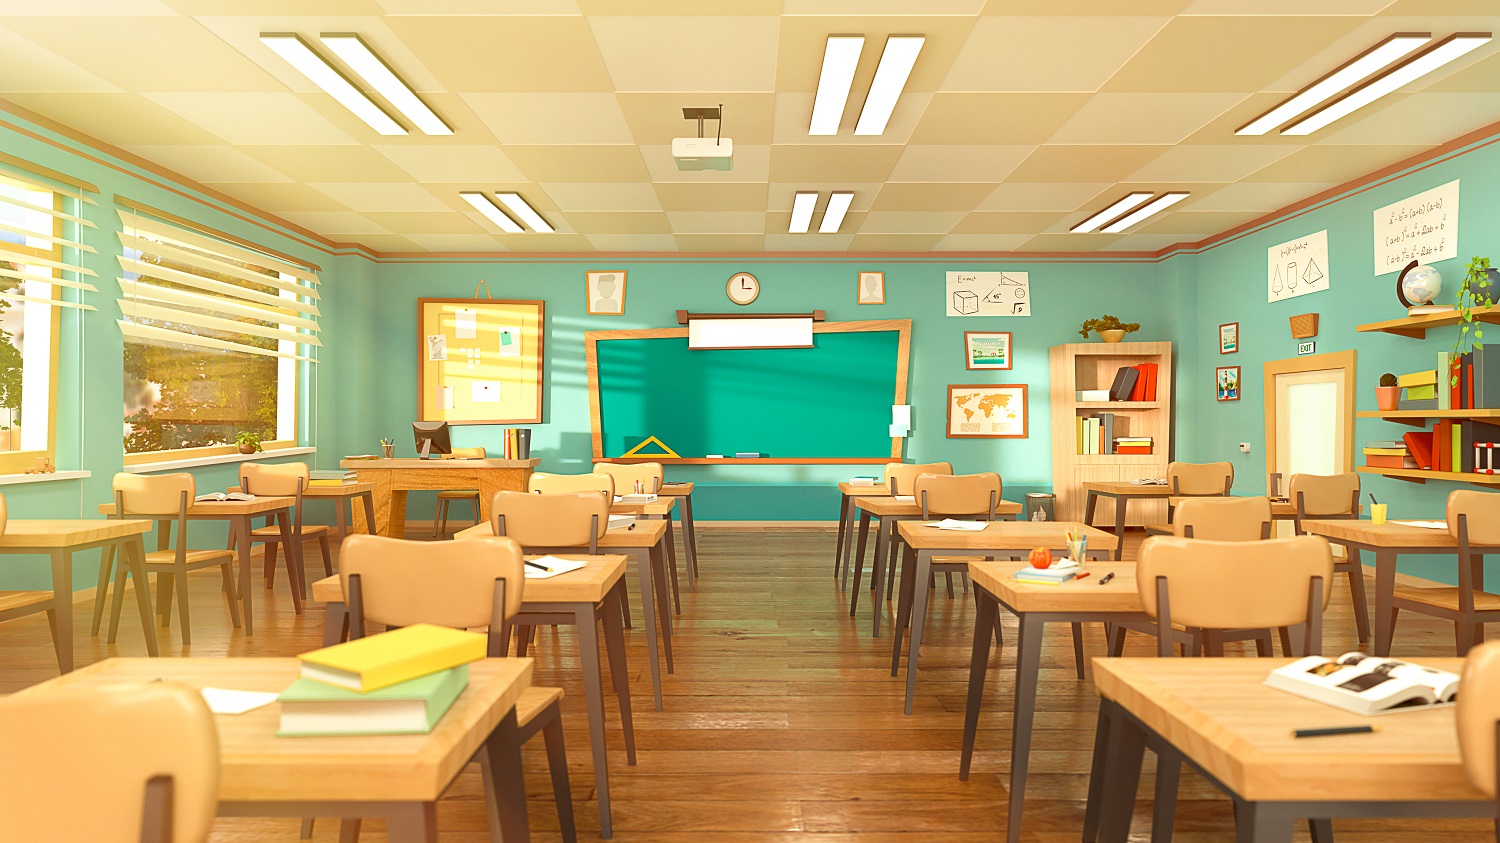 Empty school classroom in cartoon style